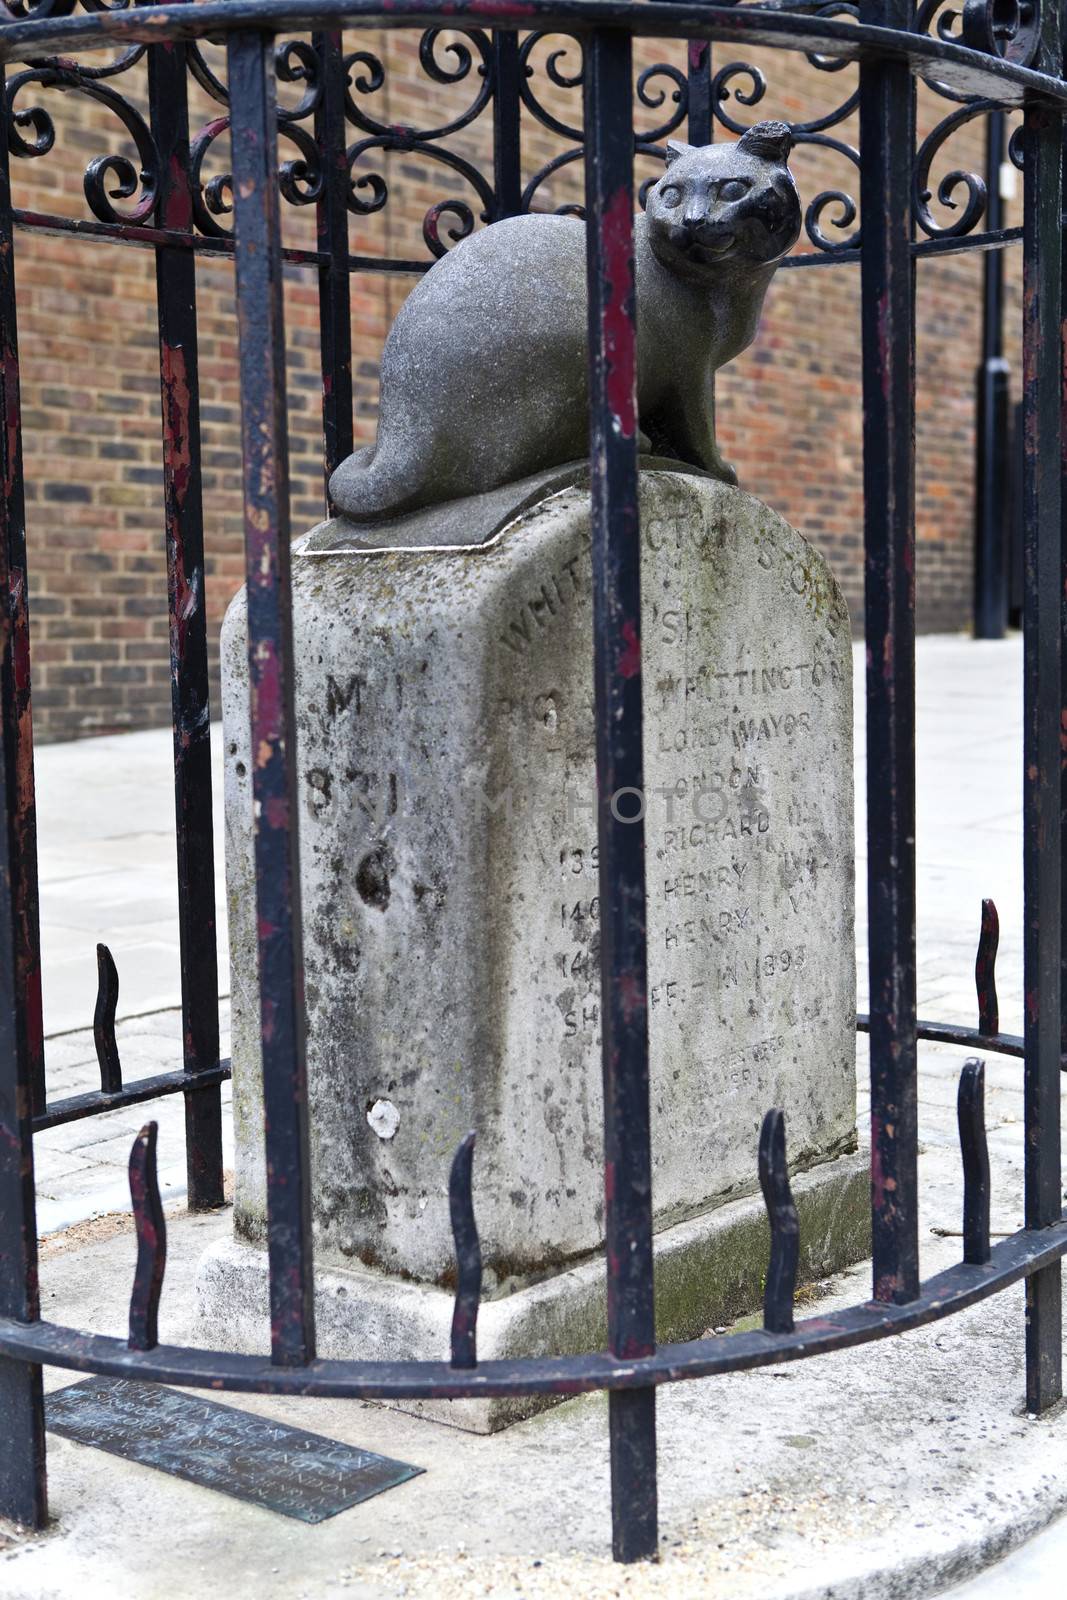 Whittington Stone in Highgate, London by chrisdorney